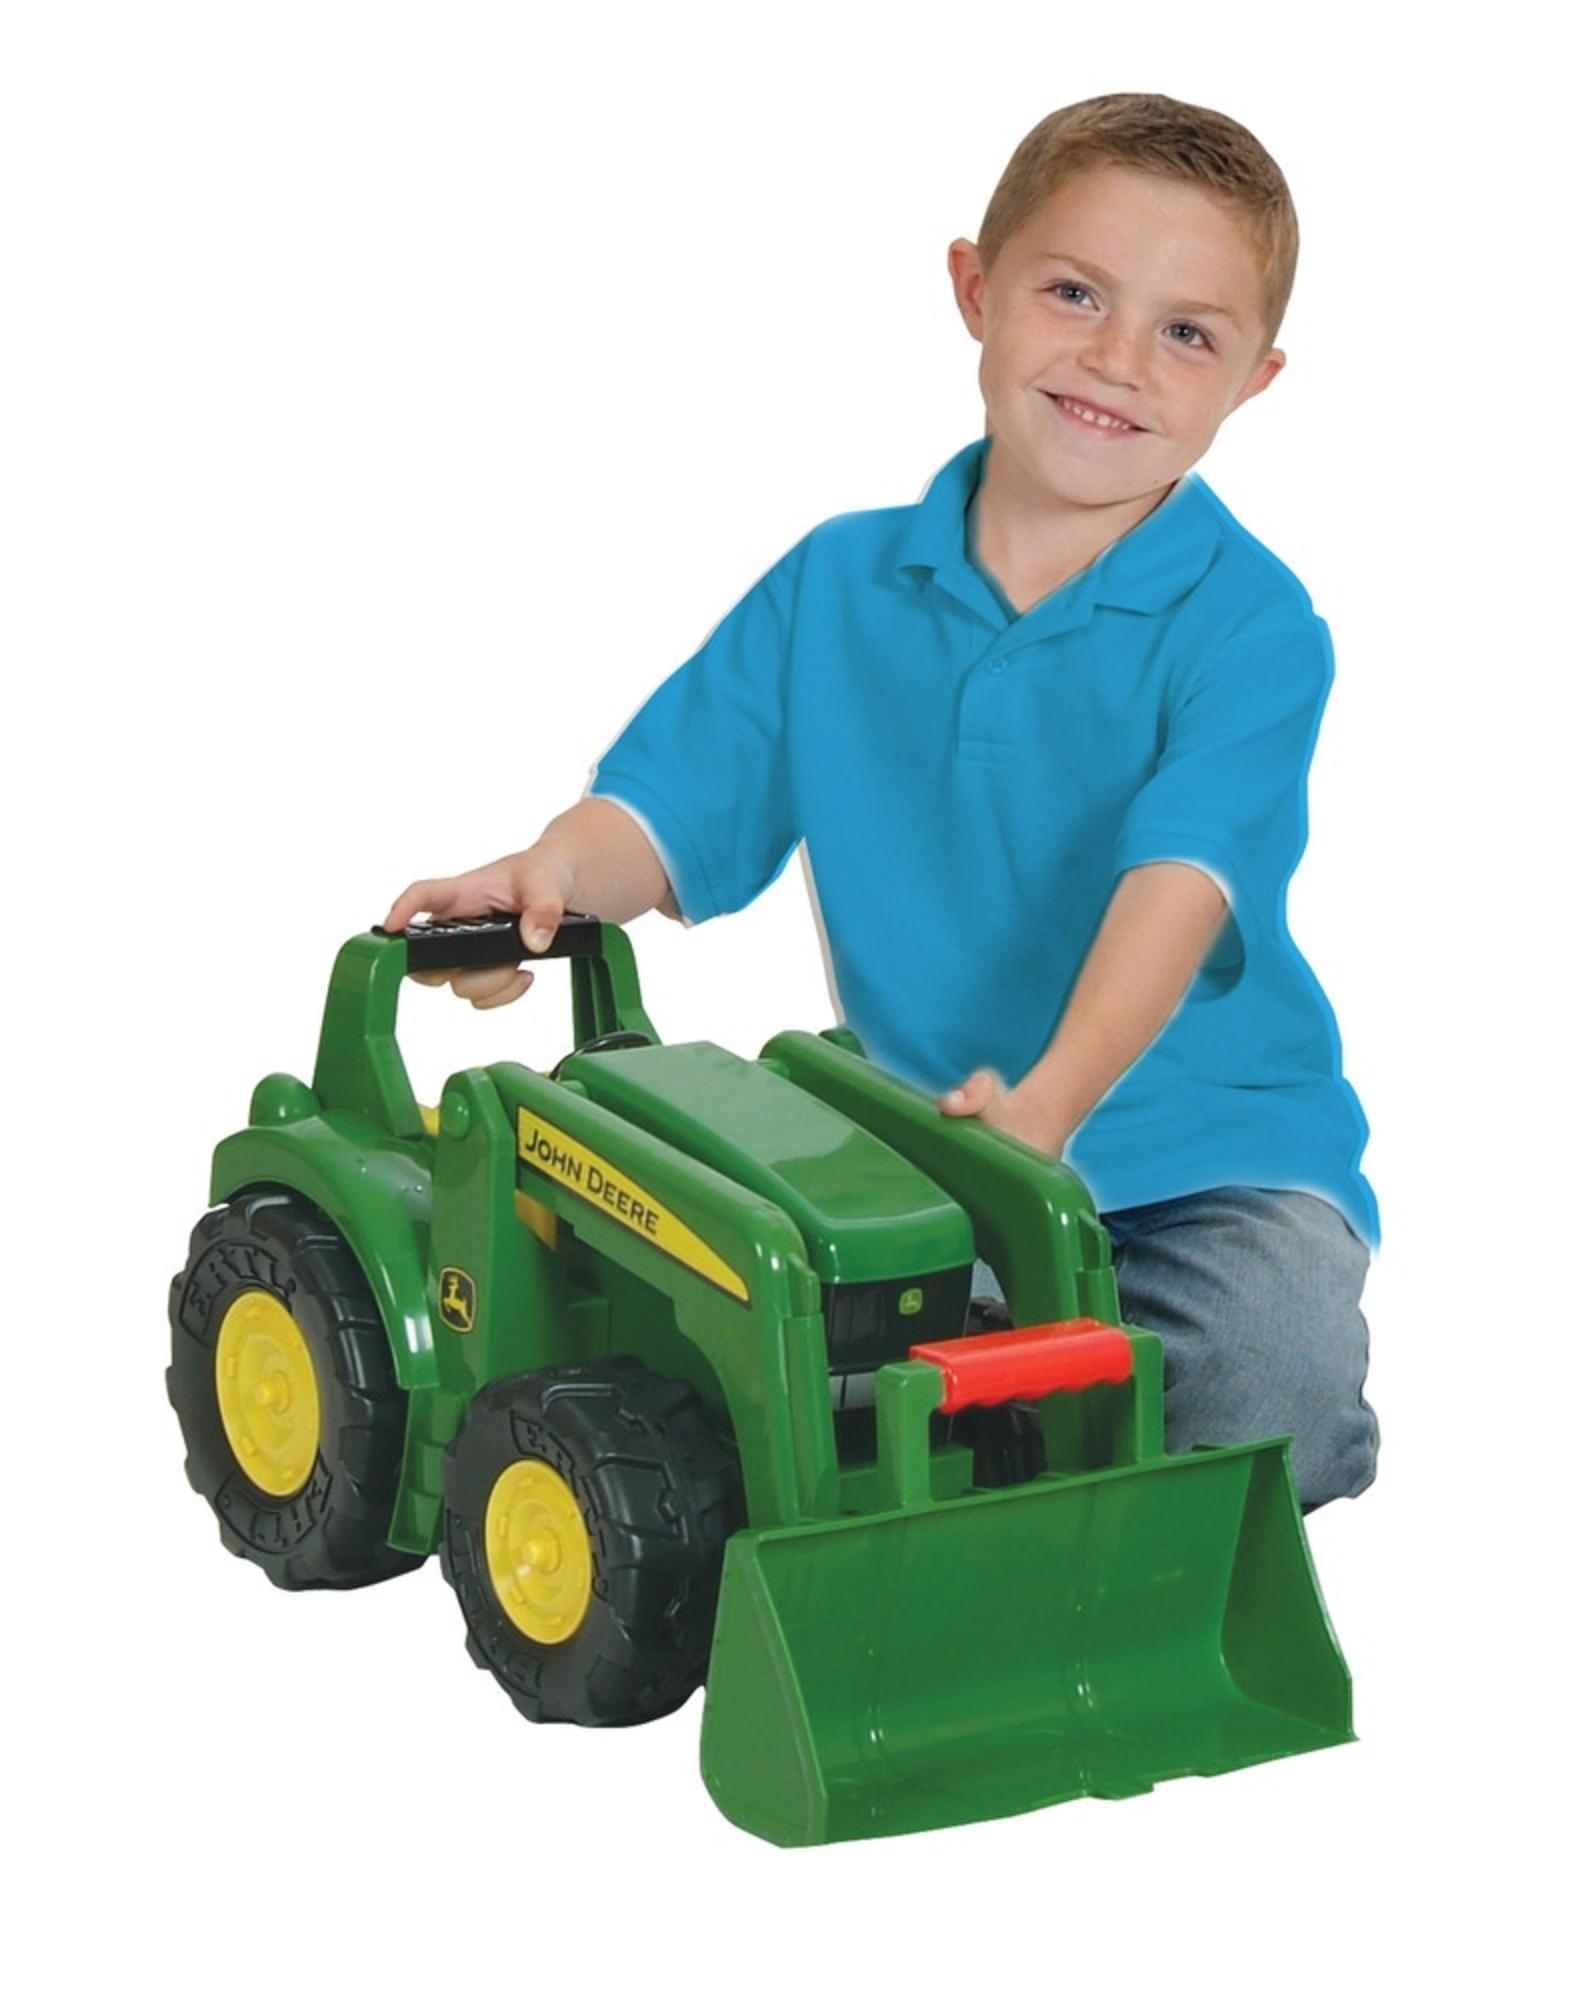 John Deere 21 Inch Big Scoop Tractor Toy with Loader - Sandbox Toy